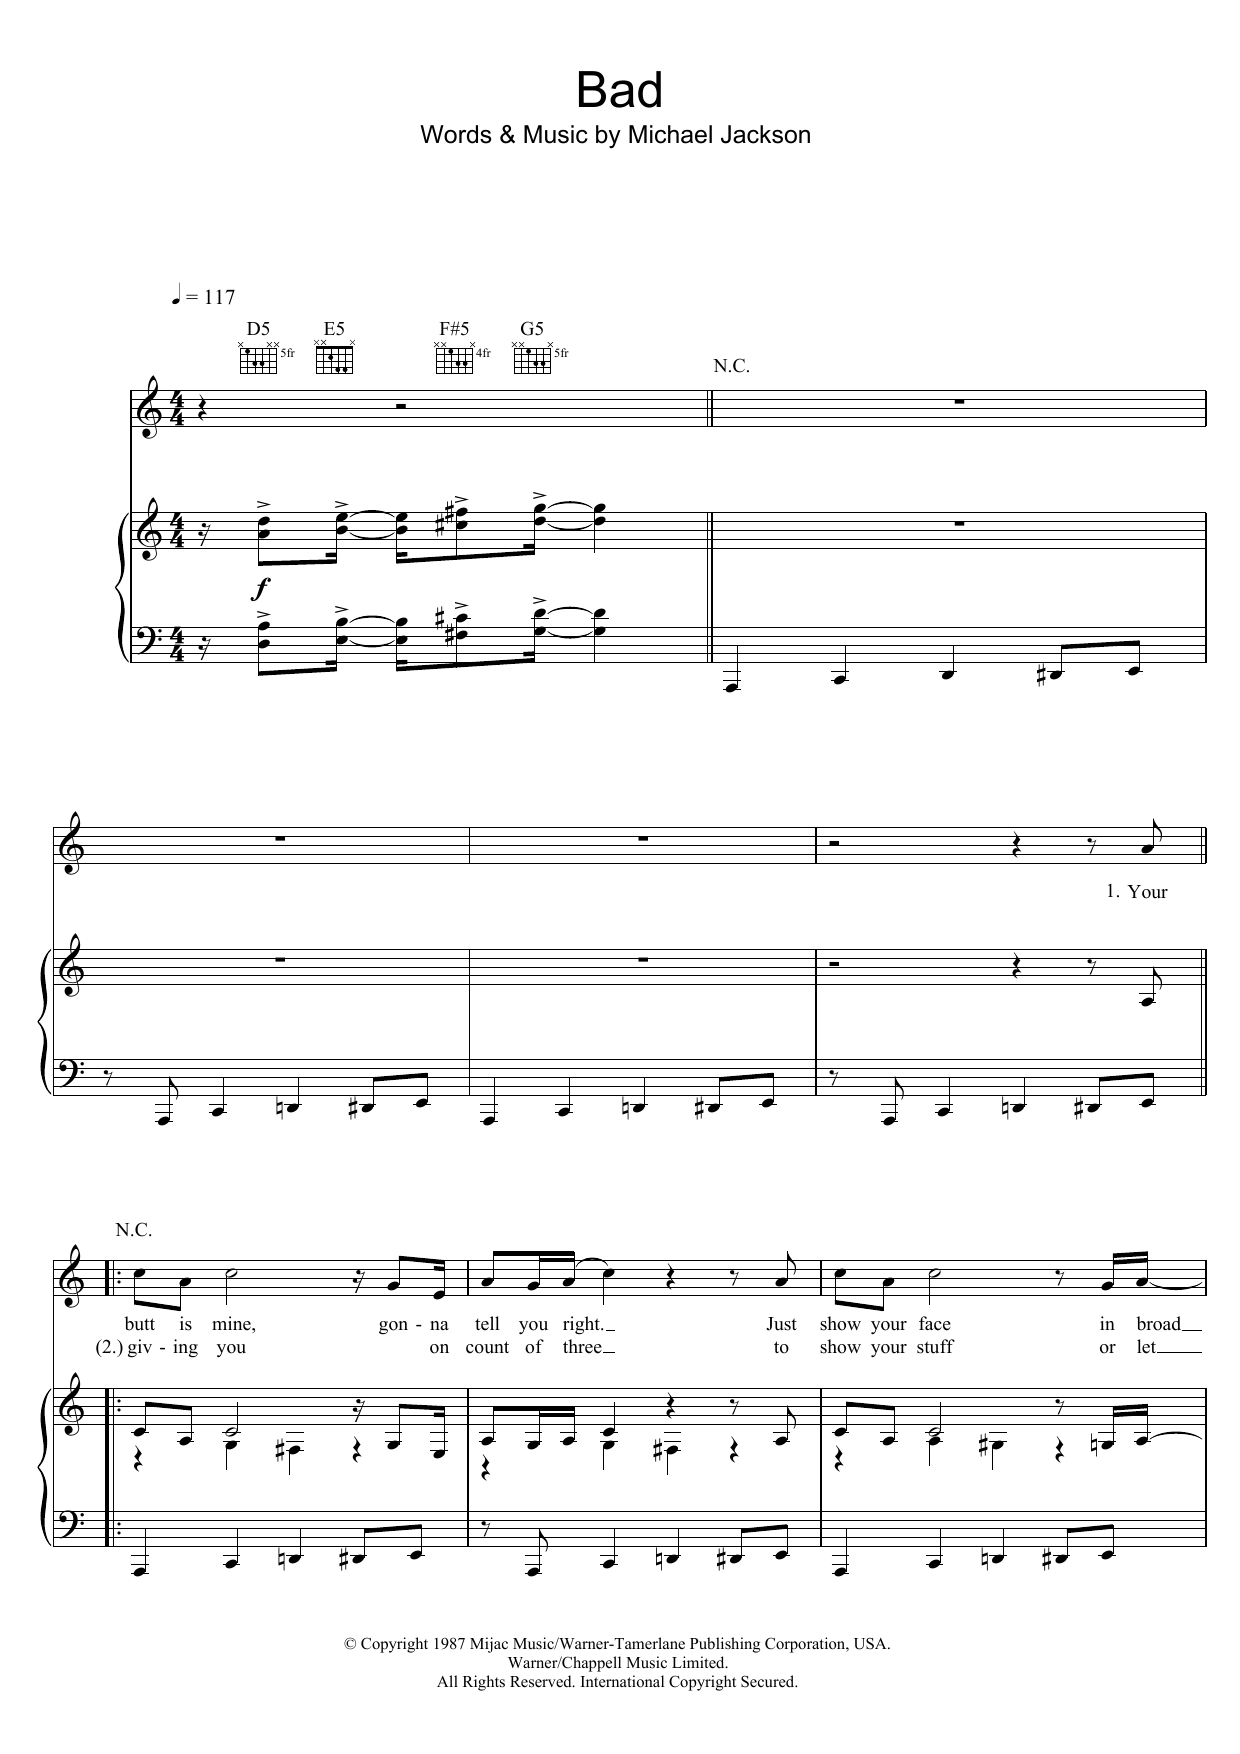 Michael Jackson Bad Sheet Music Notes & Chords for Ukulele - Download or Print PDF